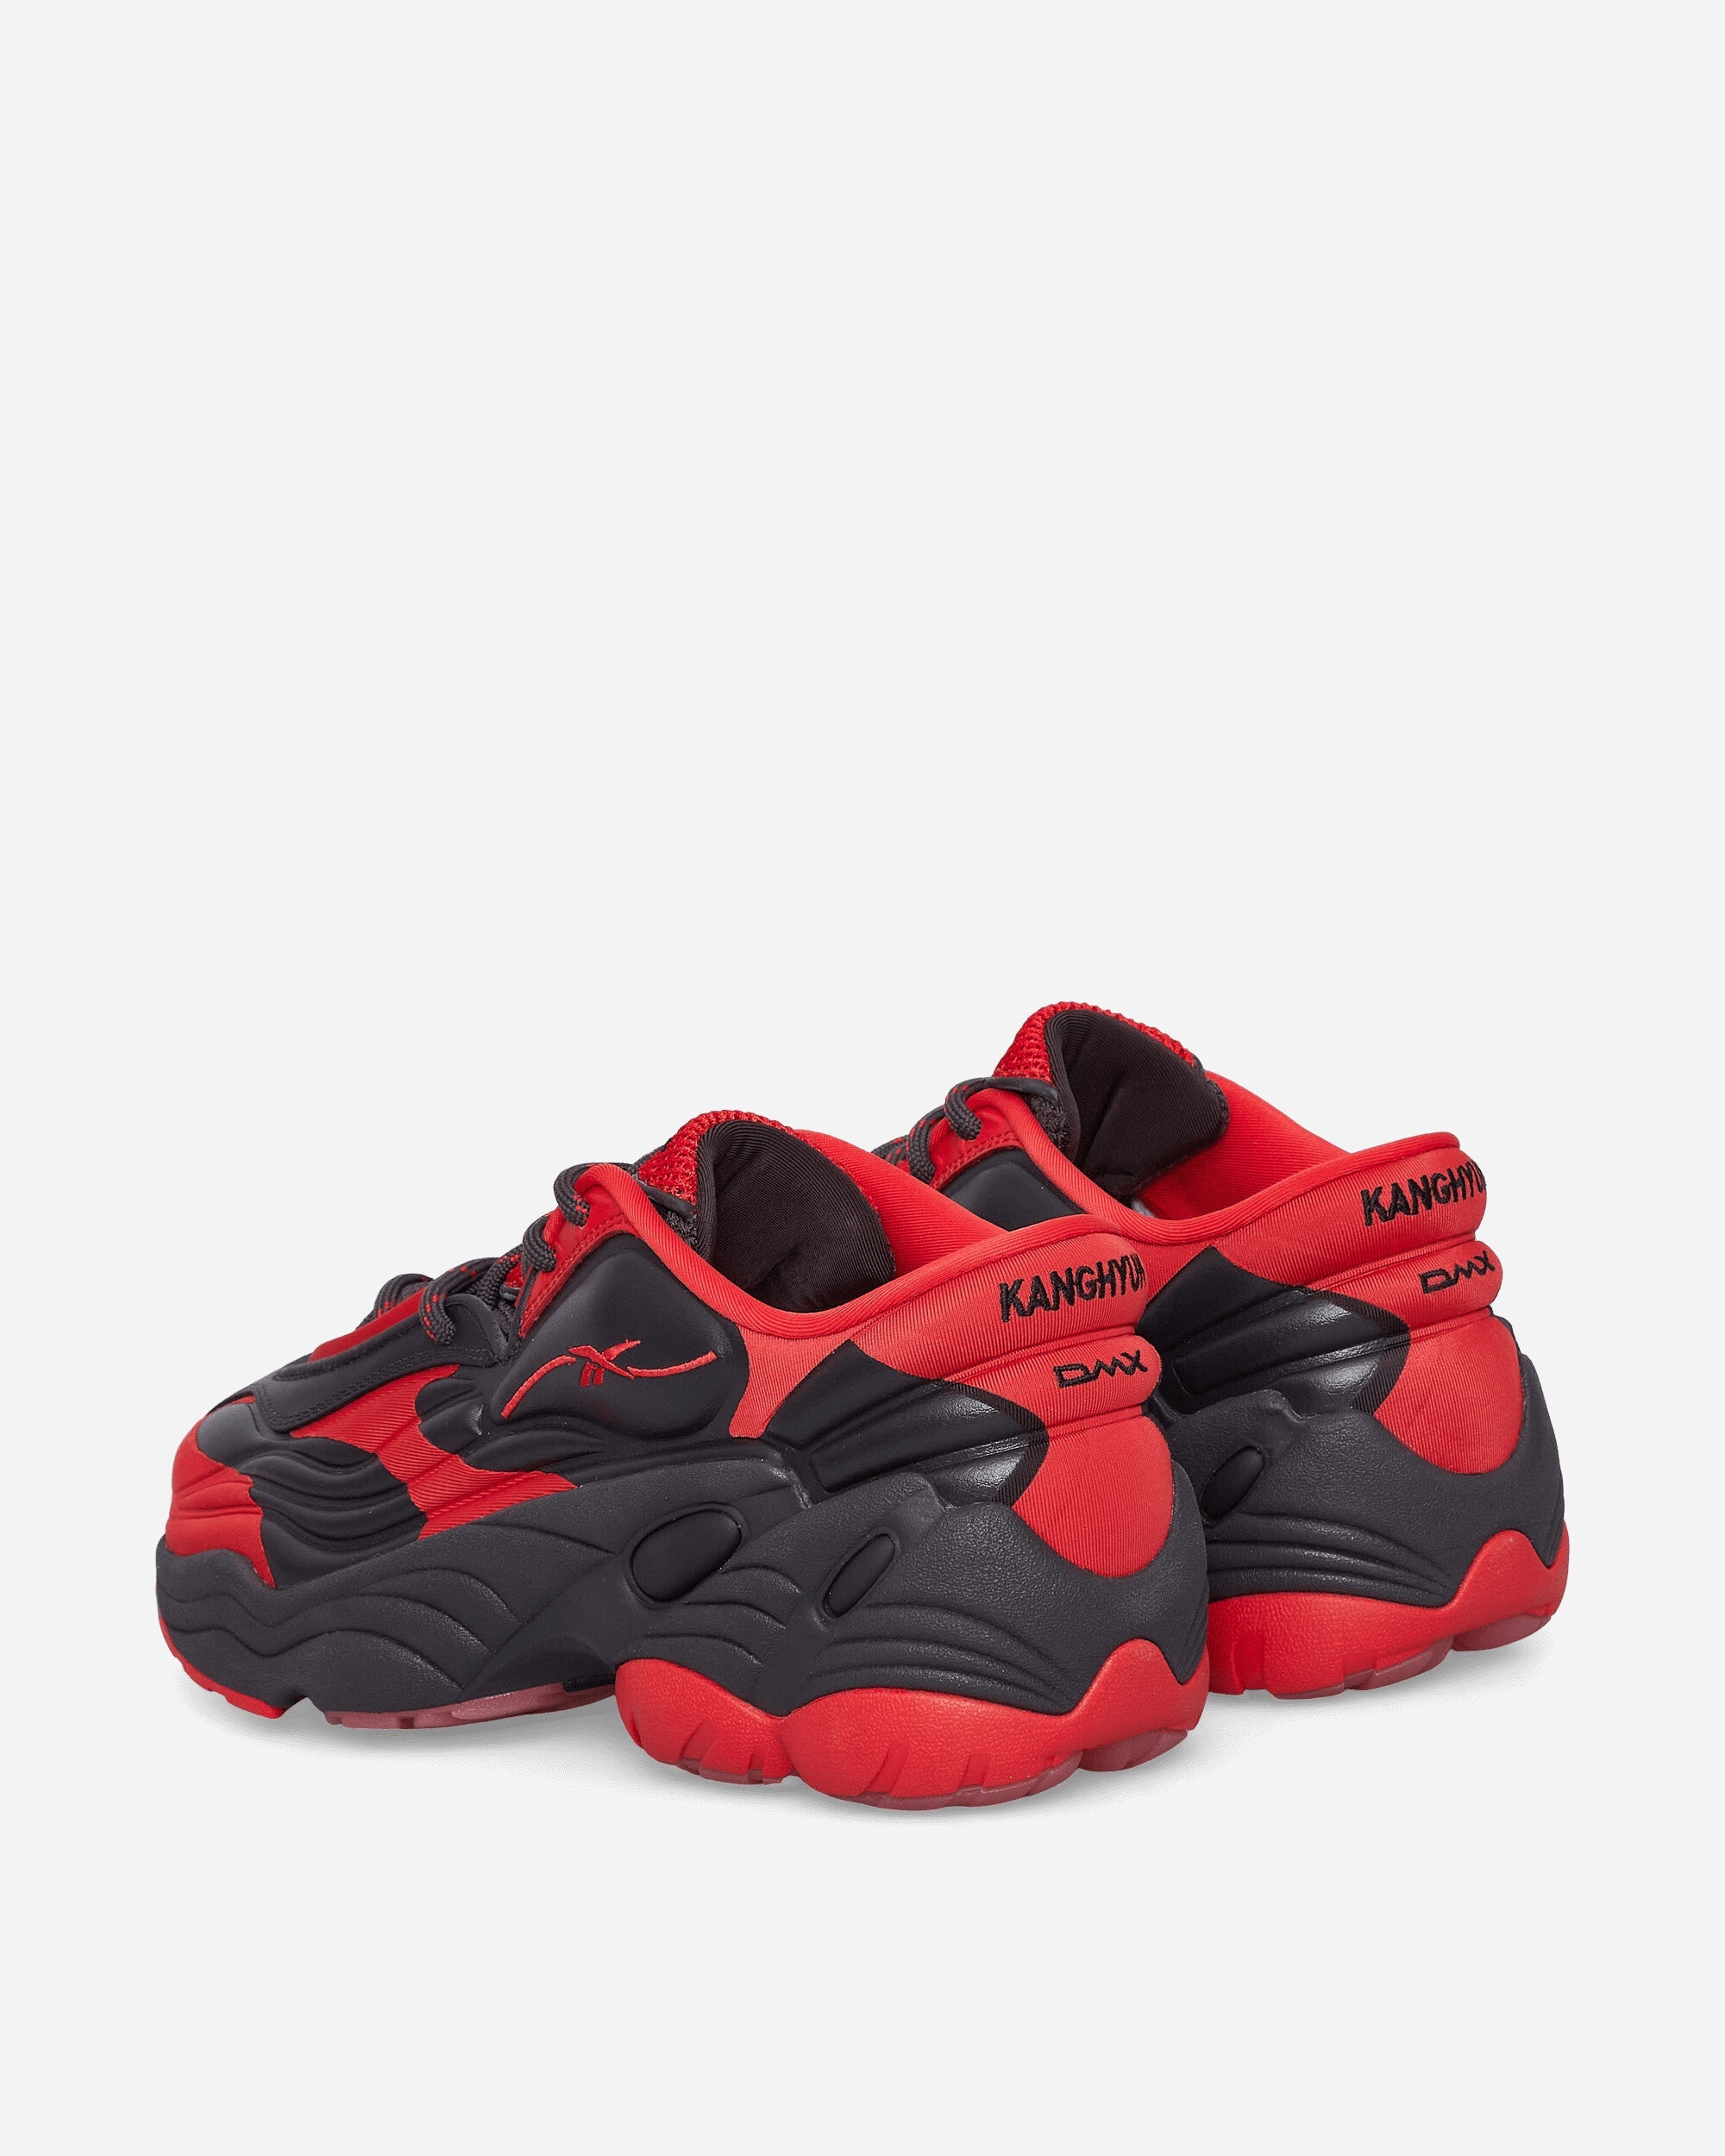 Reebok KANGHYUK DMX Run 6 Modern Sneakers Black / Red | REVERSIBLE